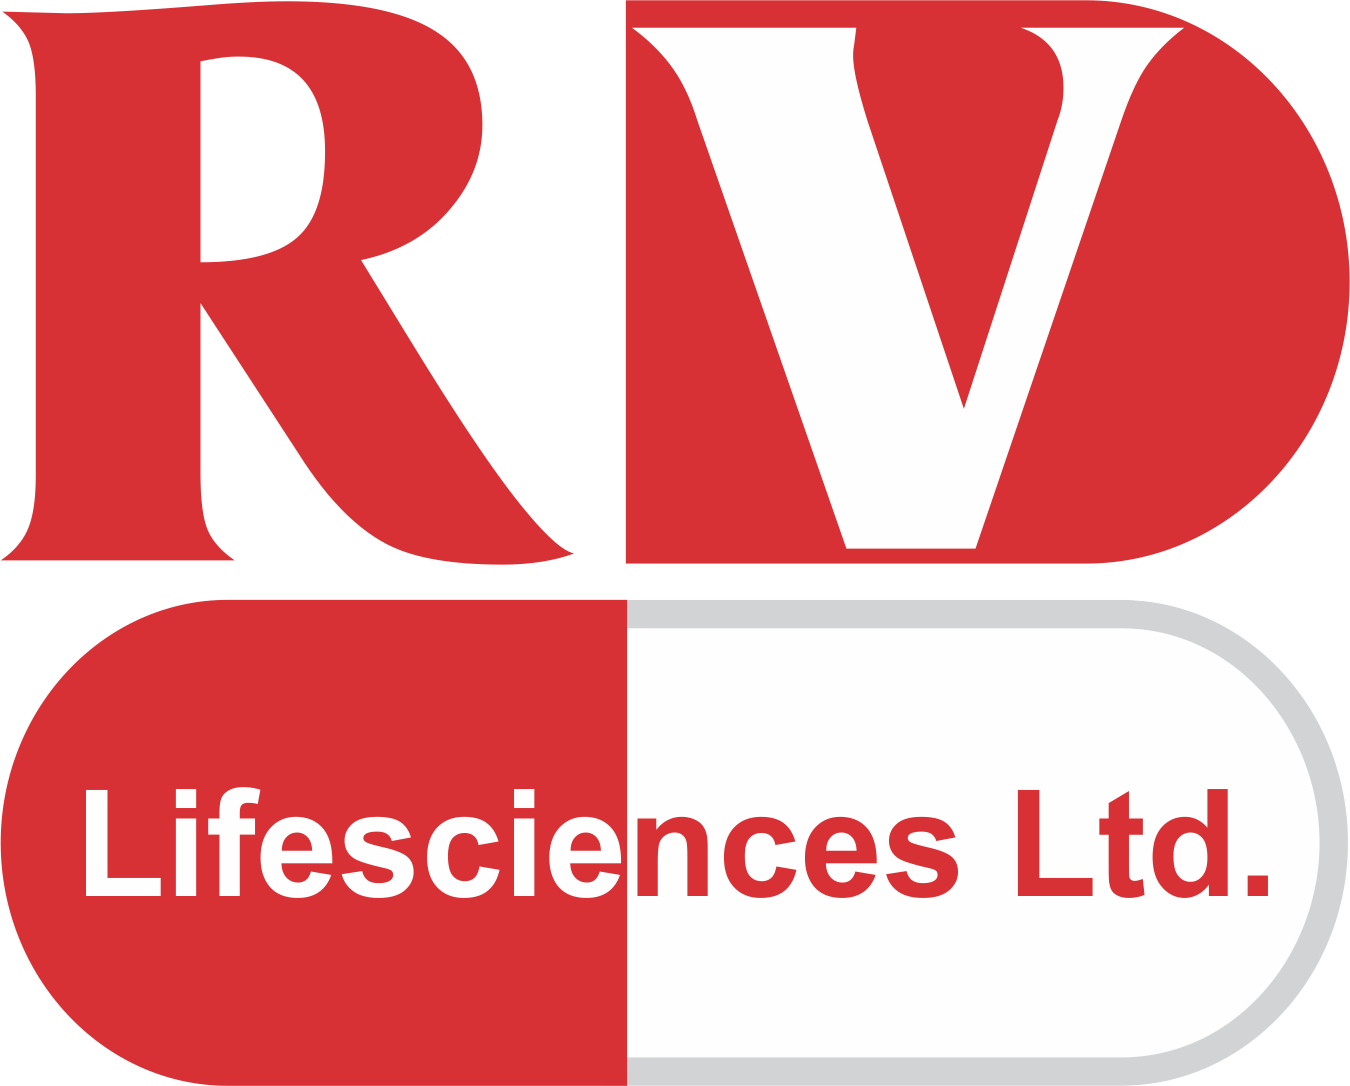 RV Lifesciences Ltd